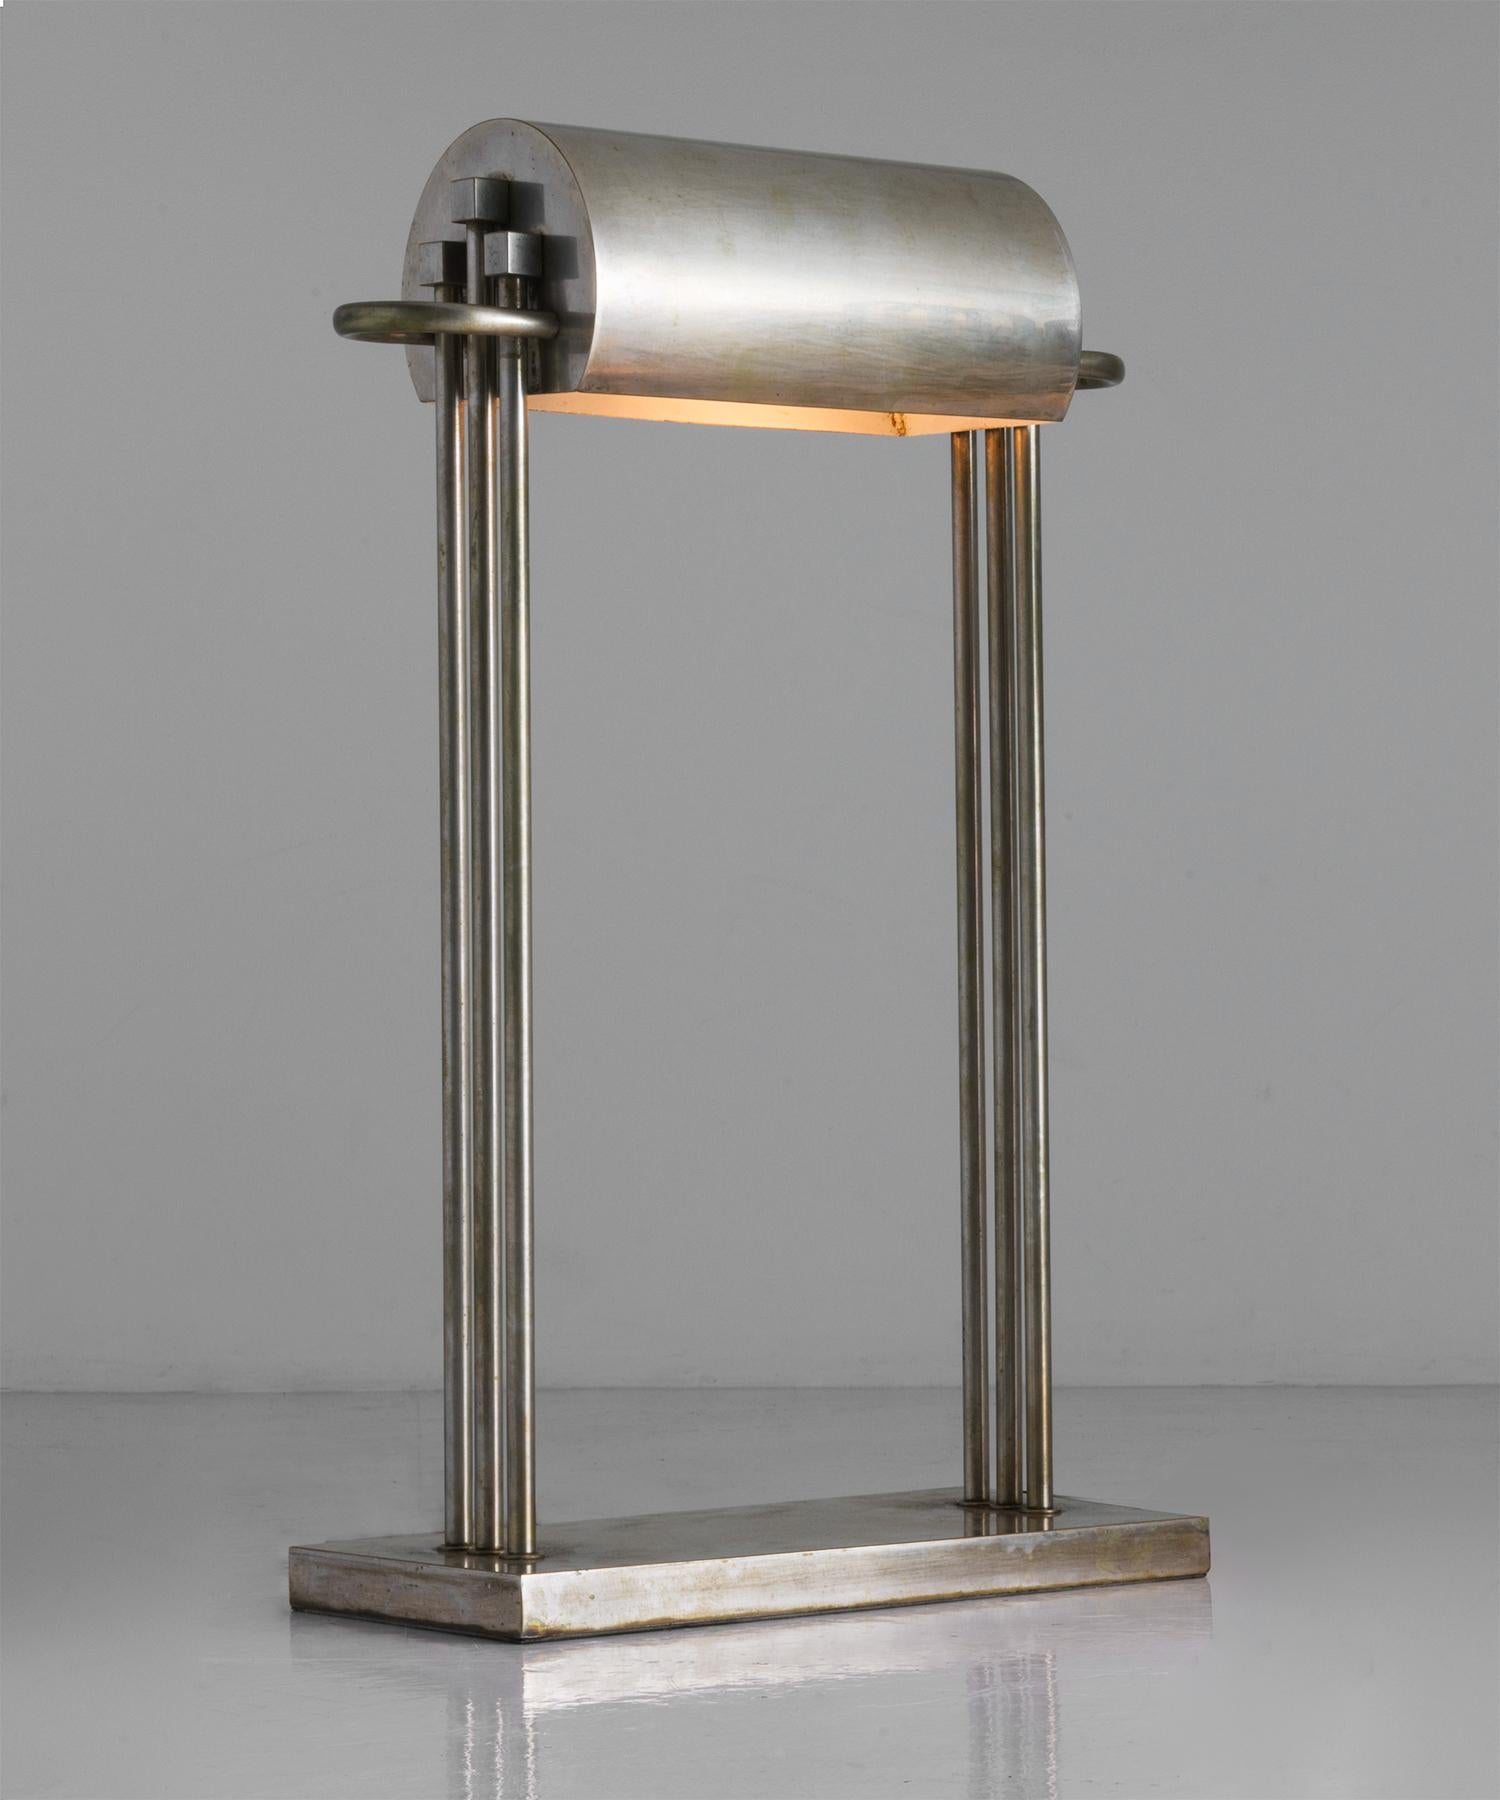 Modern Marcel Breuer Desk Lamp, Germany, circa 1925